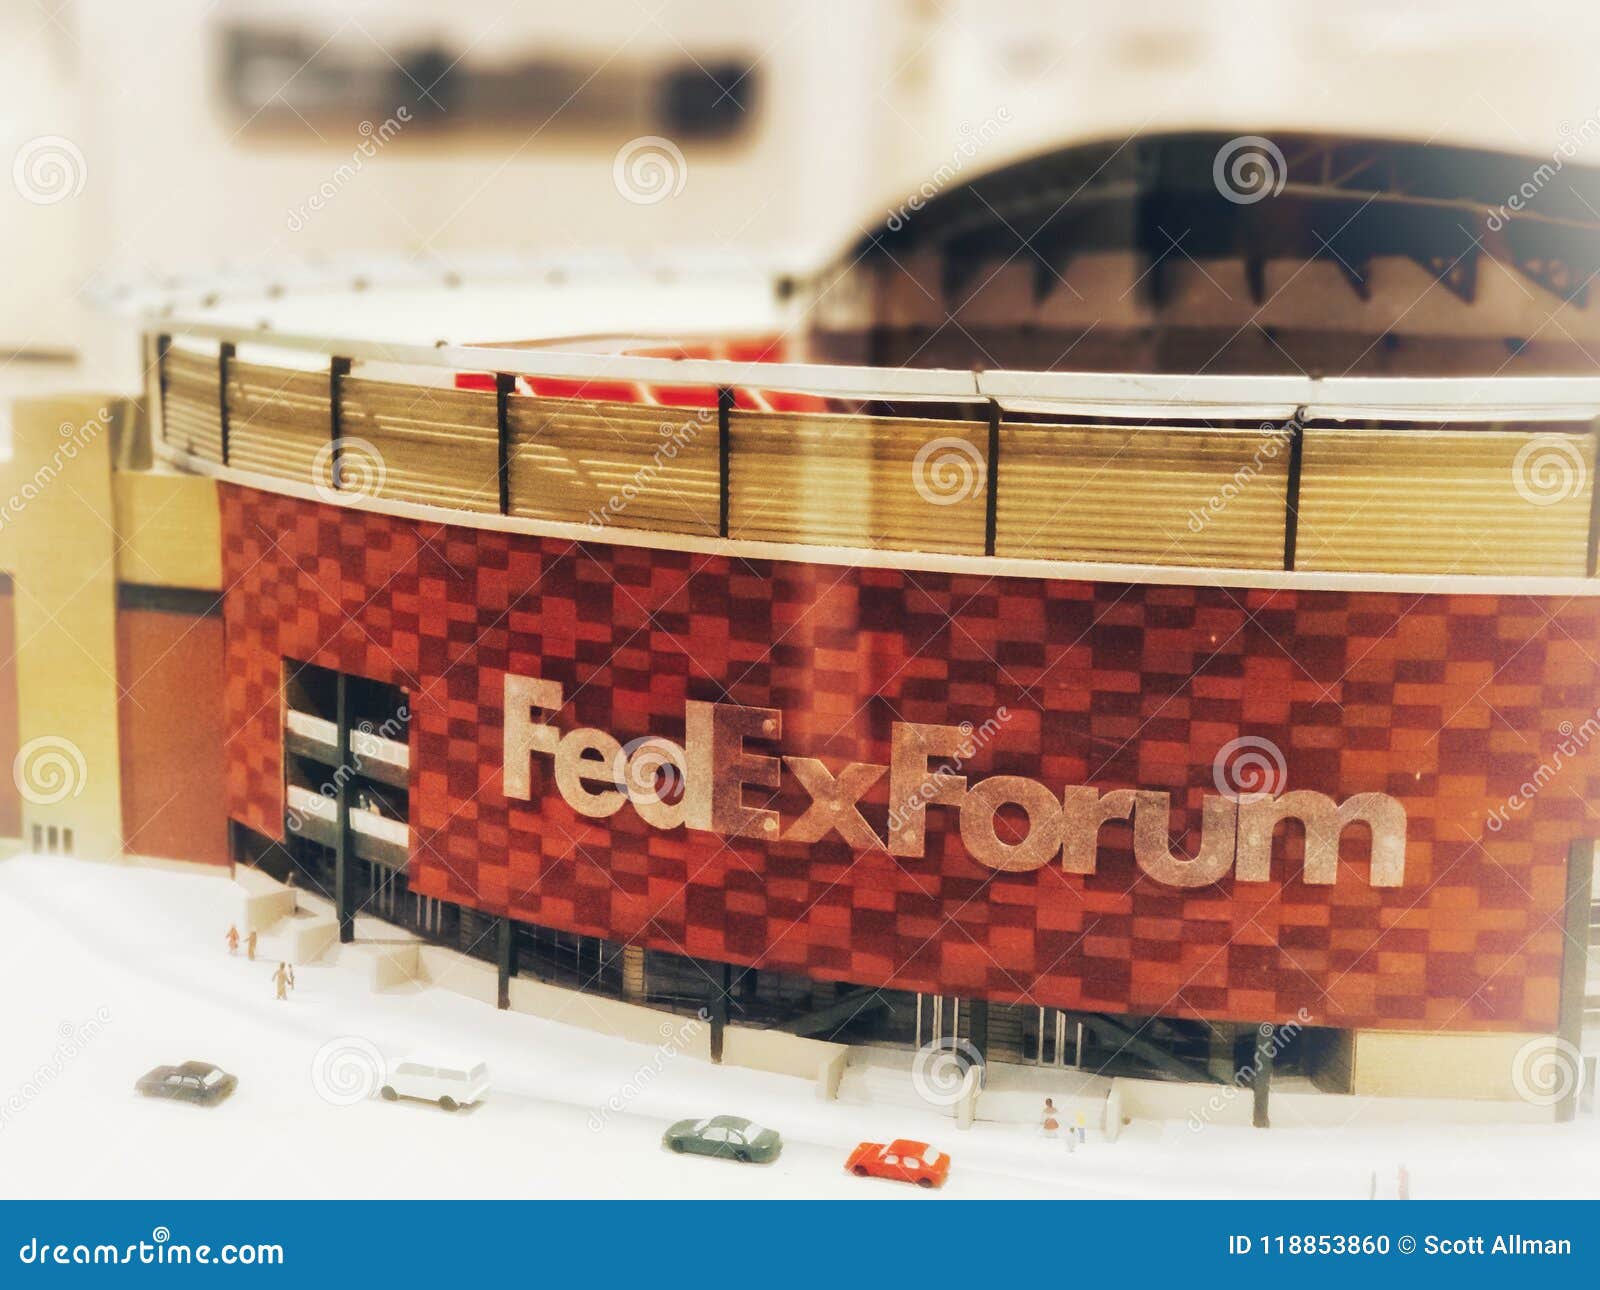 Fedex Forum Memphis Tn Stock Photo - Download Image Now